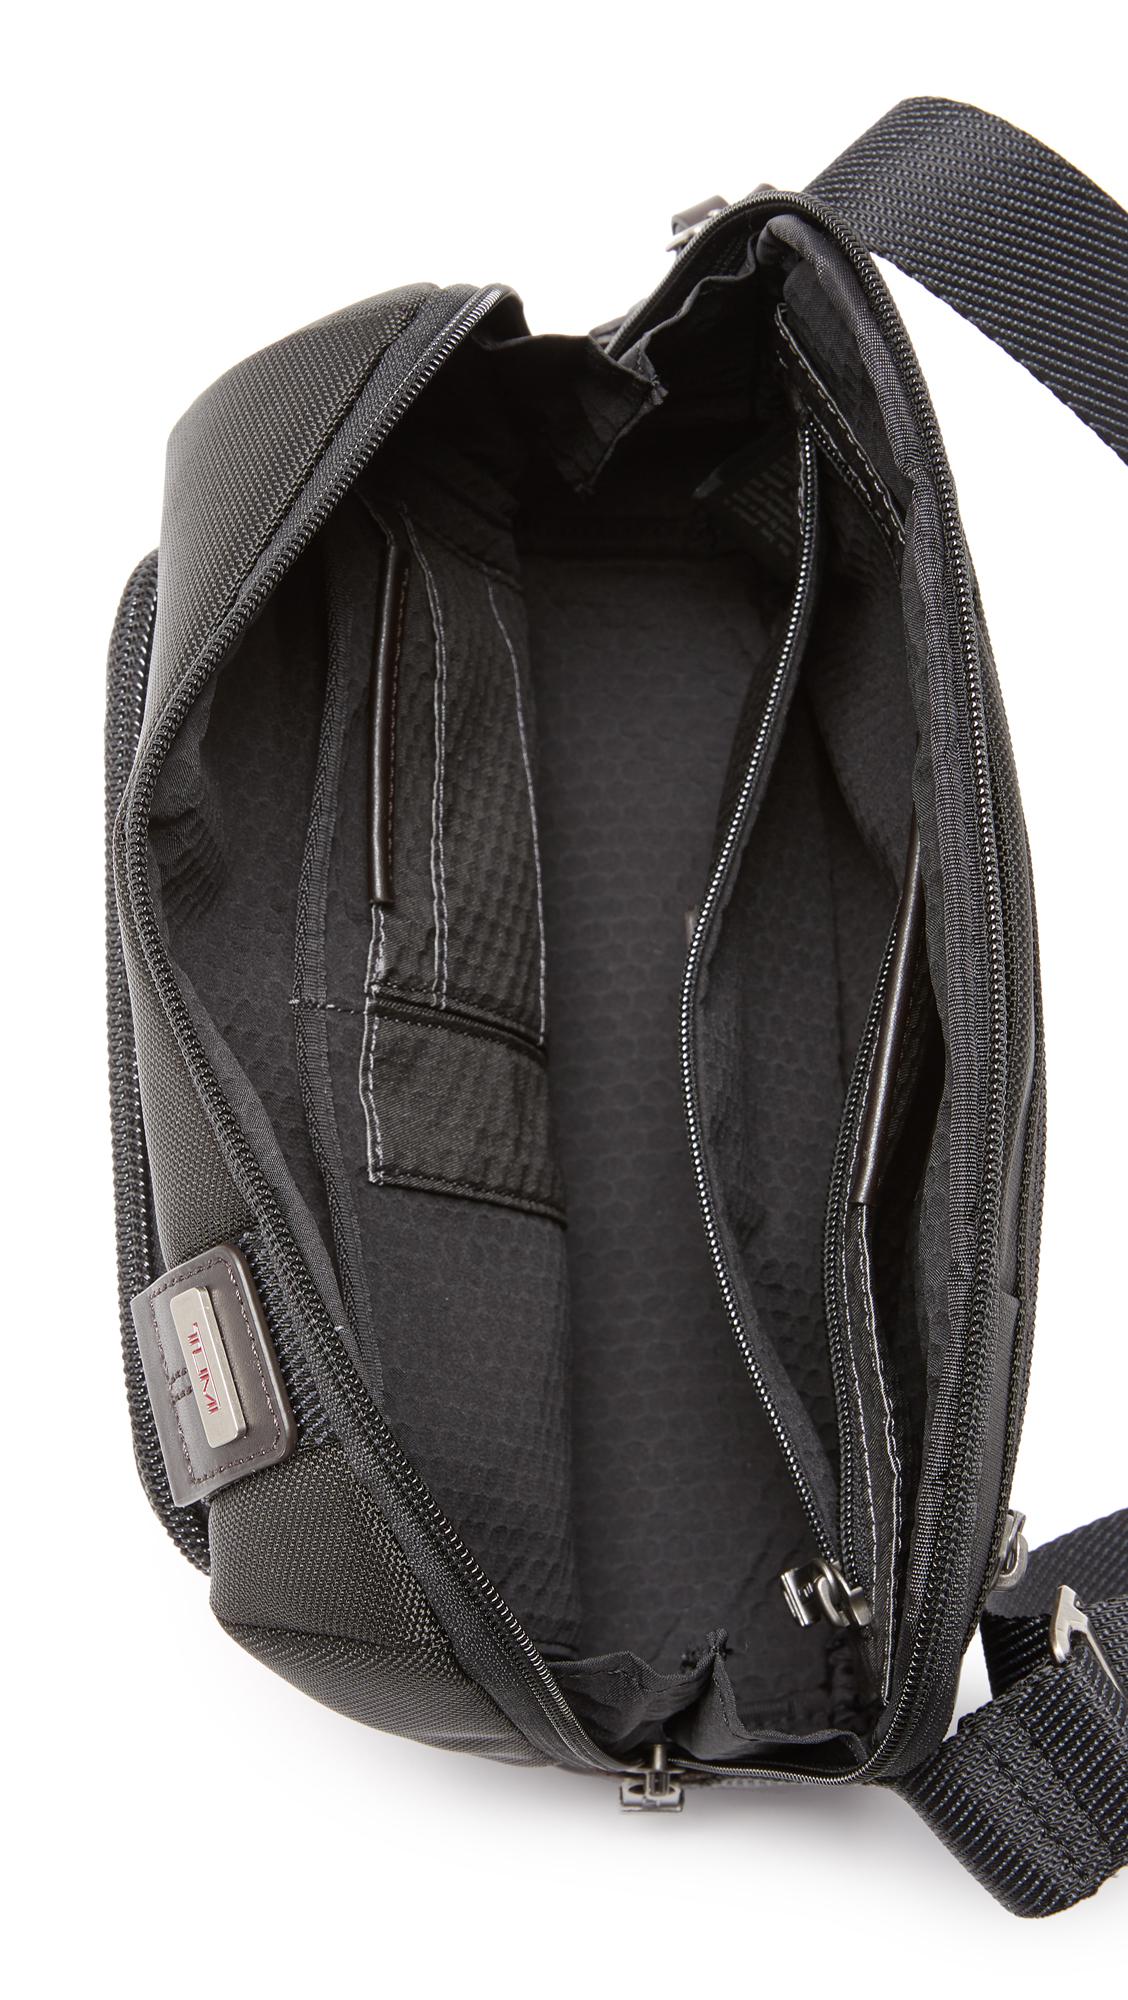 Tumi Alpha Bravo Lester Cross Body Bag in Black for Men - Lyst